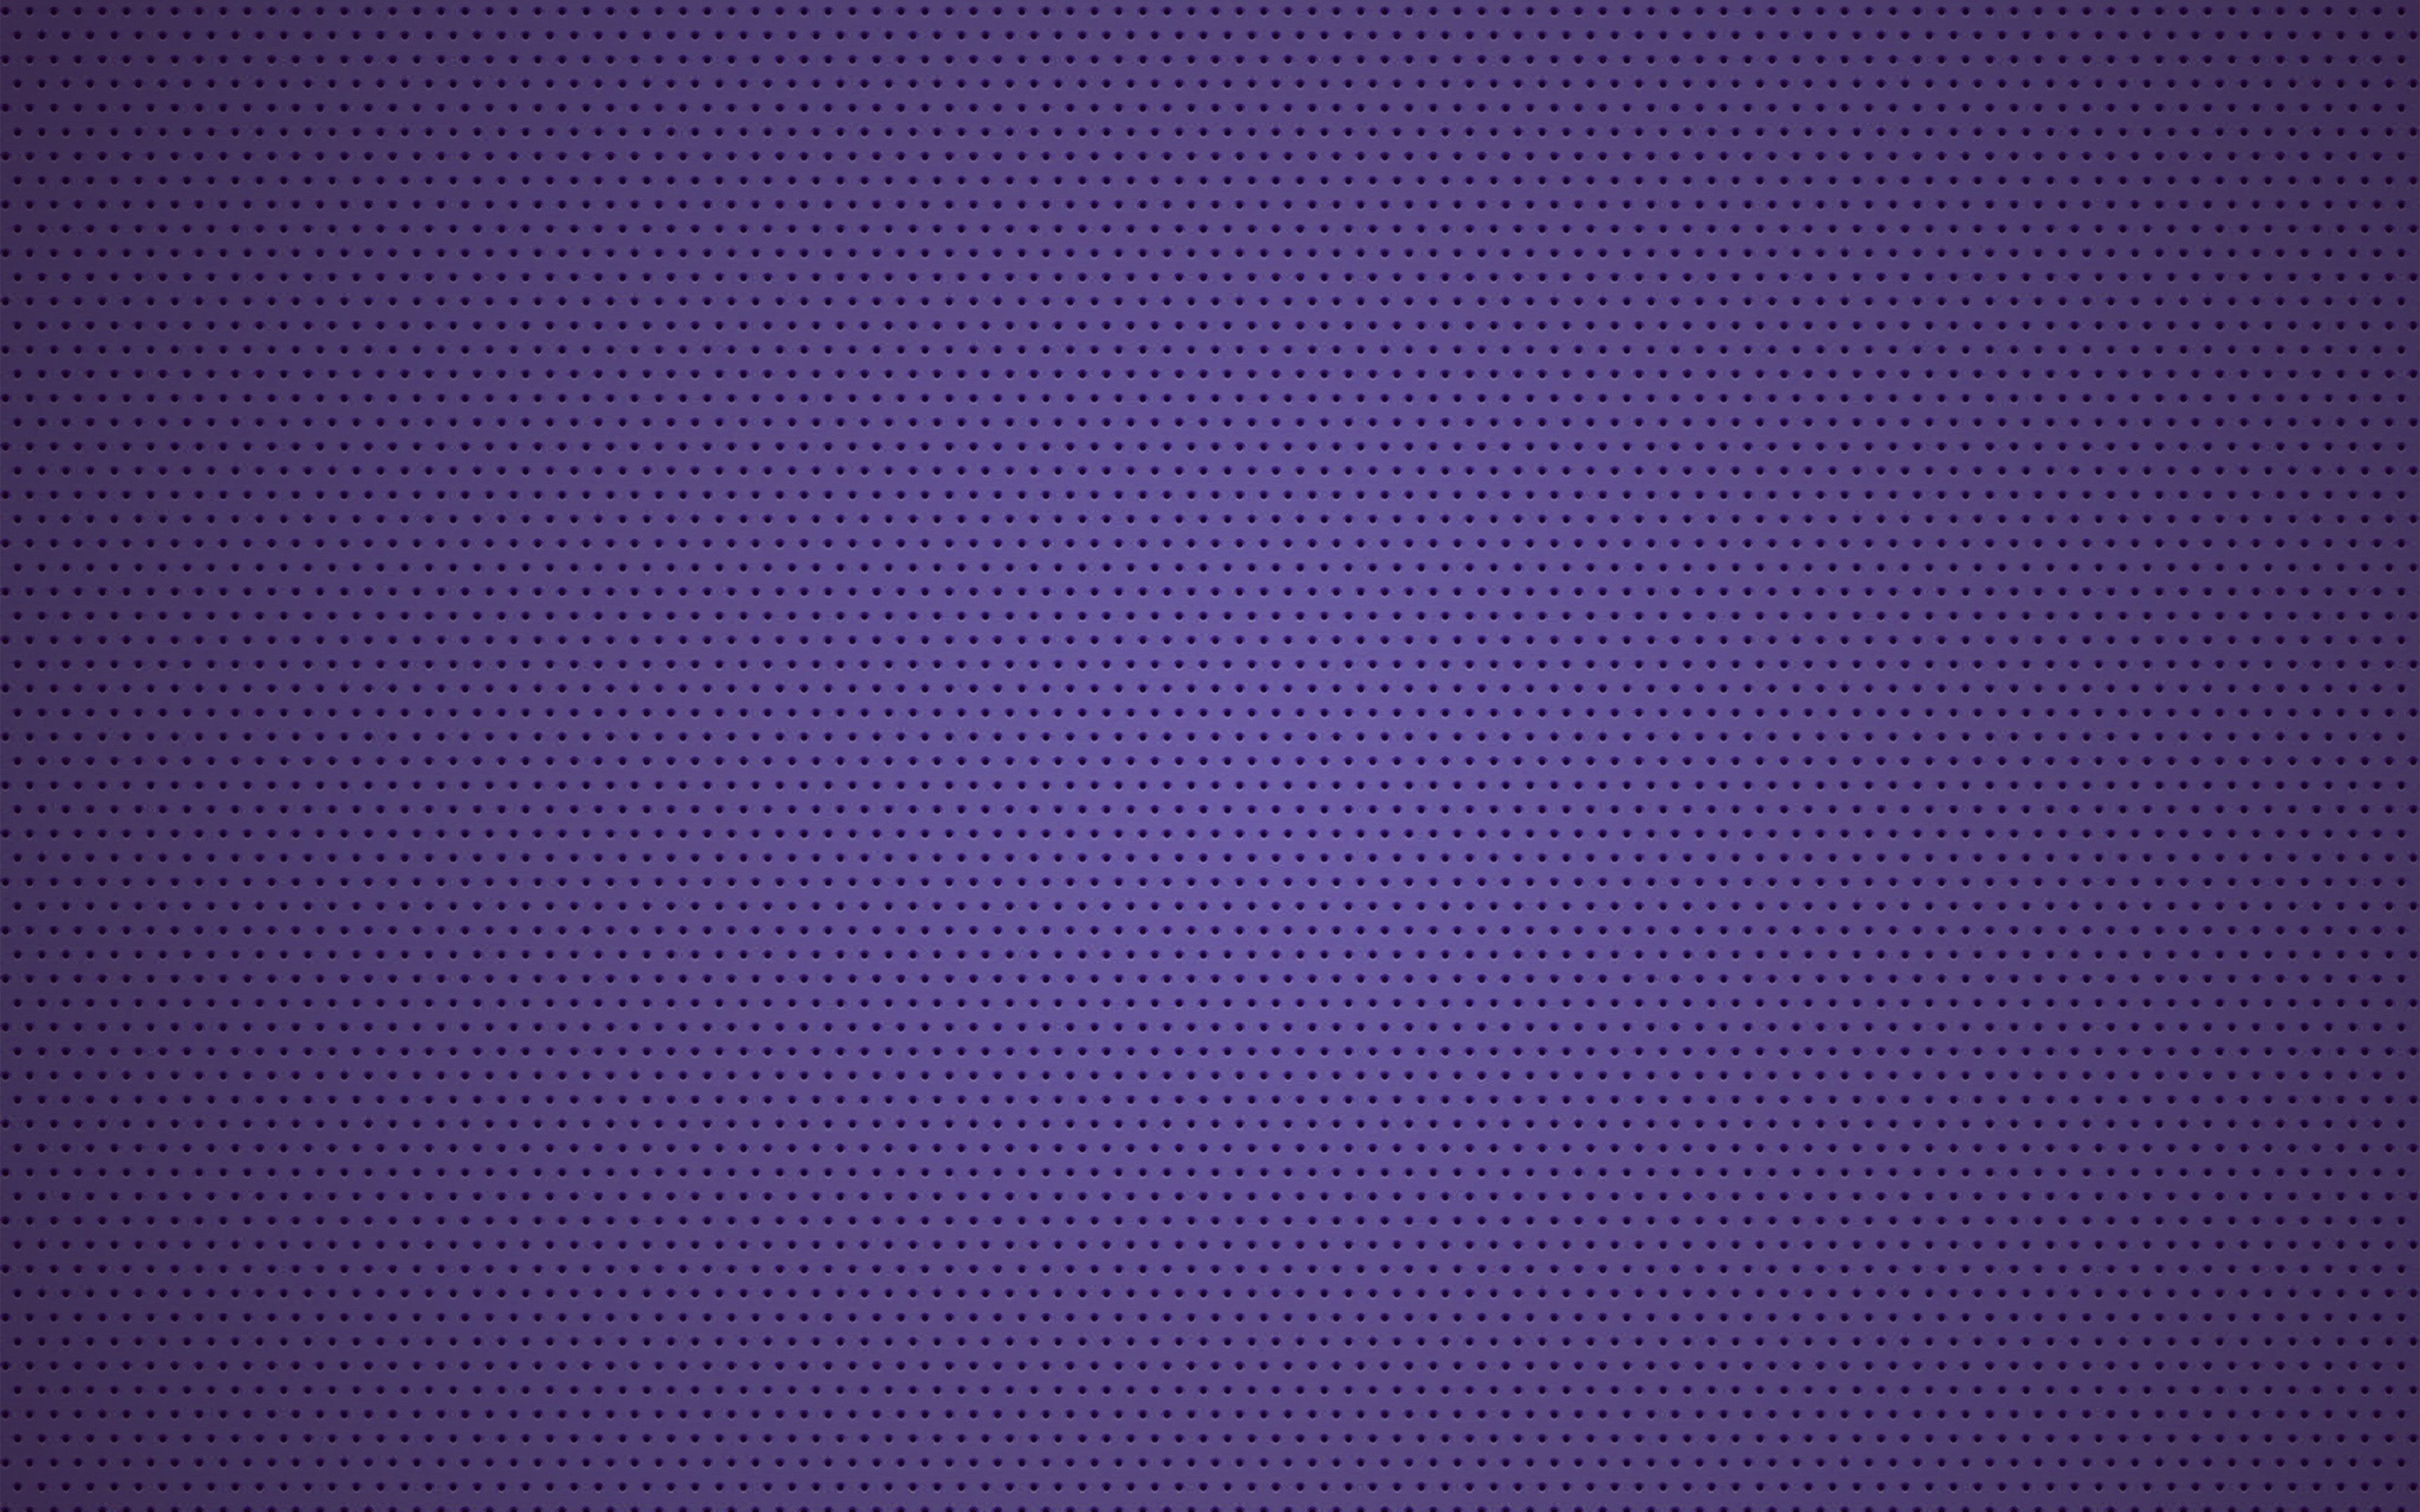 wallpaper for desktop, laptop. dot purple texture pattern